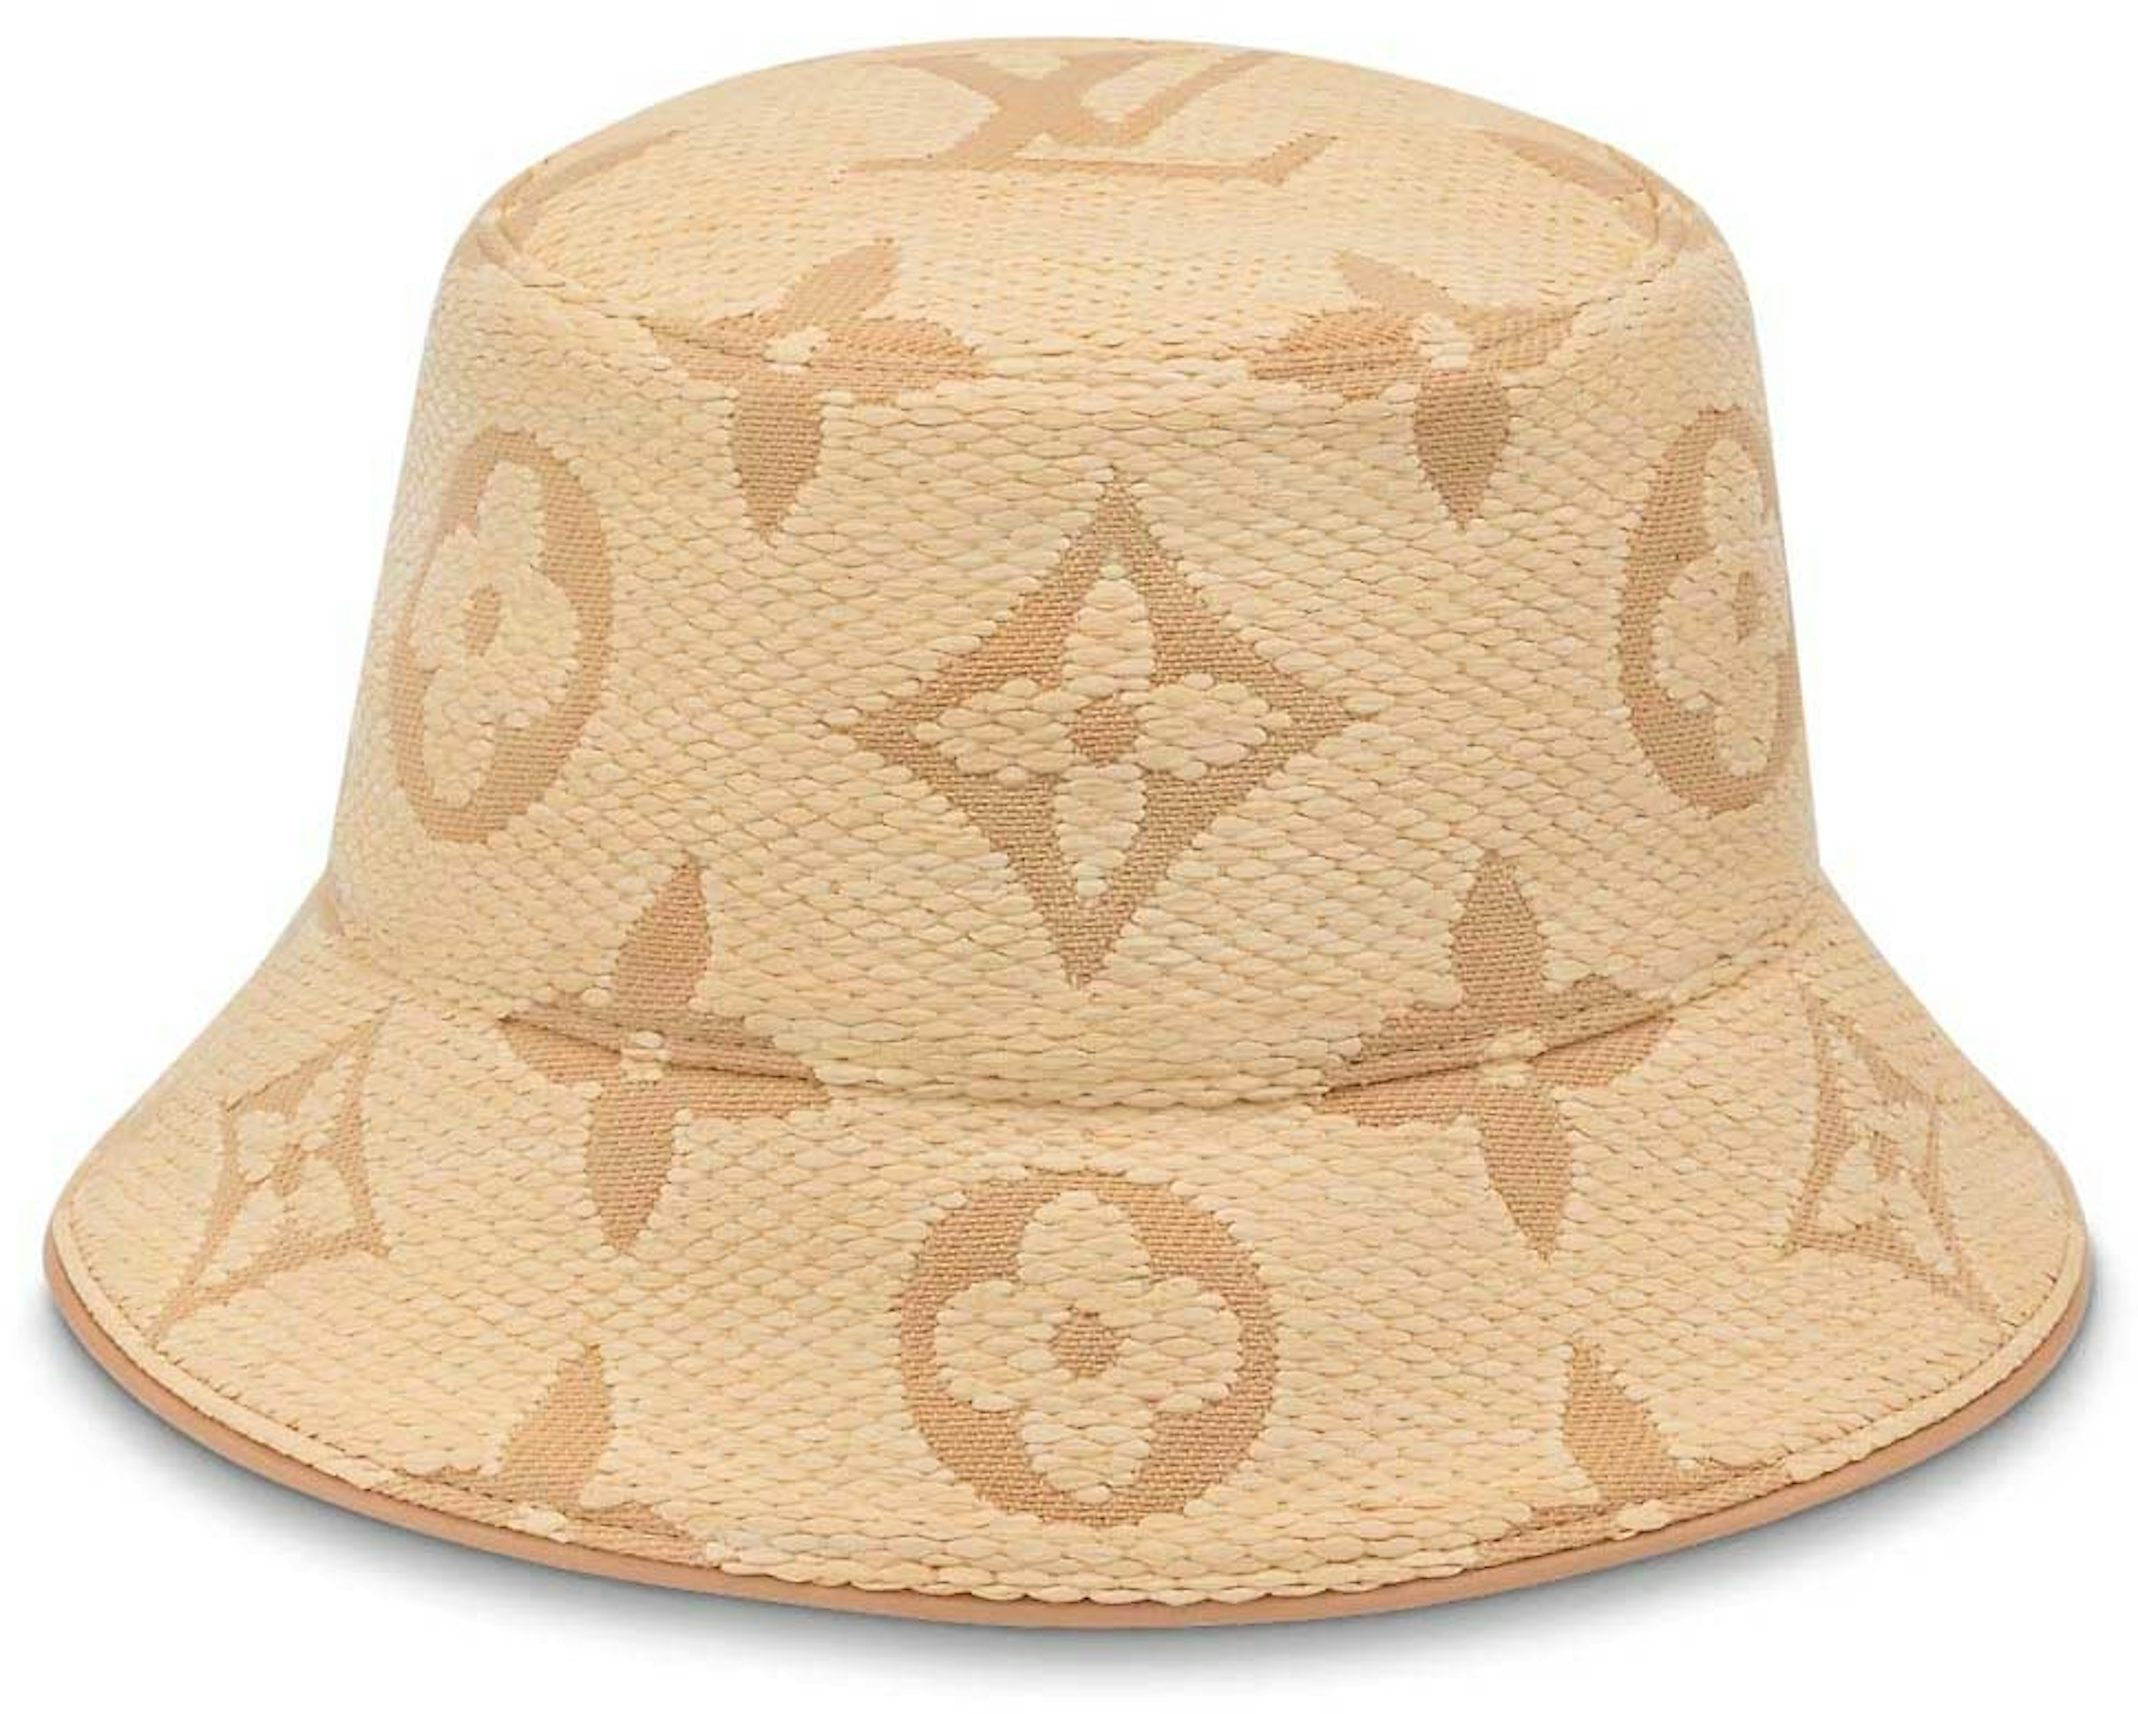 Louis Vuitton, Accessories, The Monogram Packable Bucket Hat